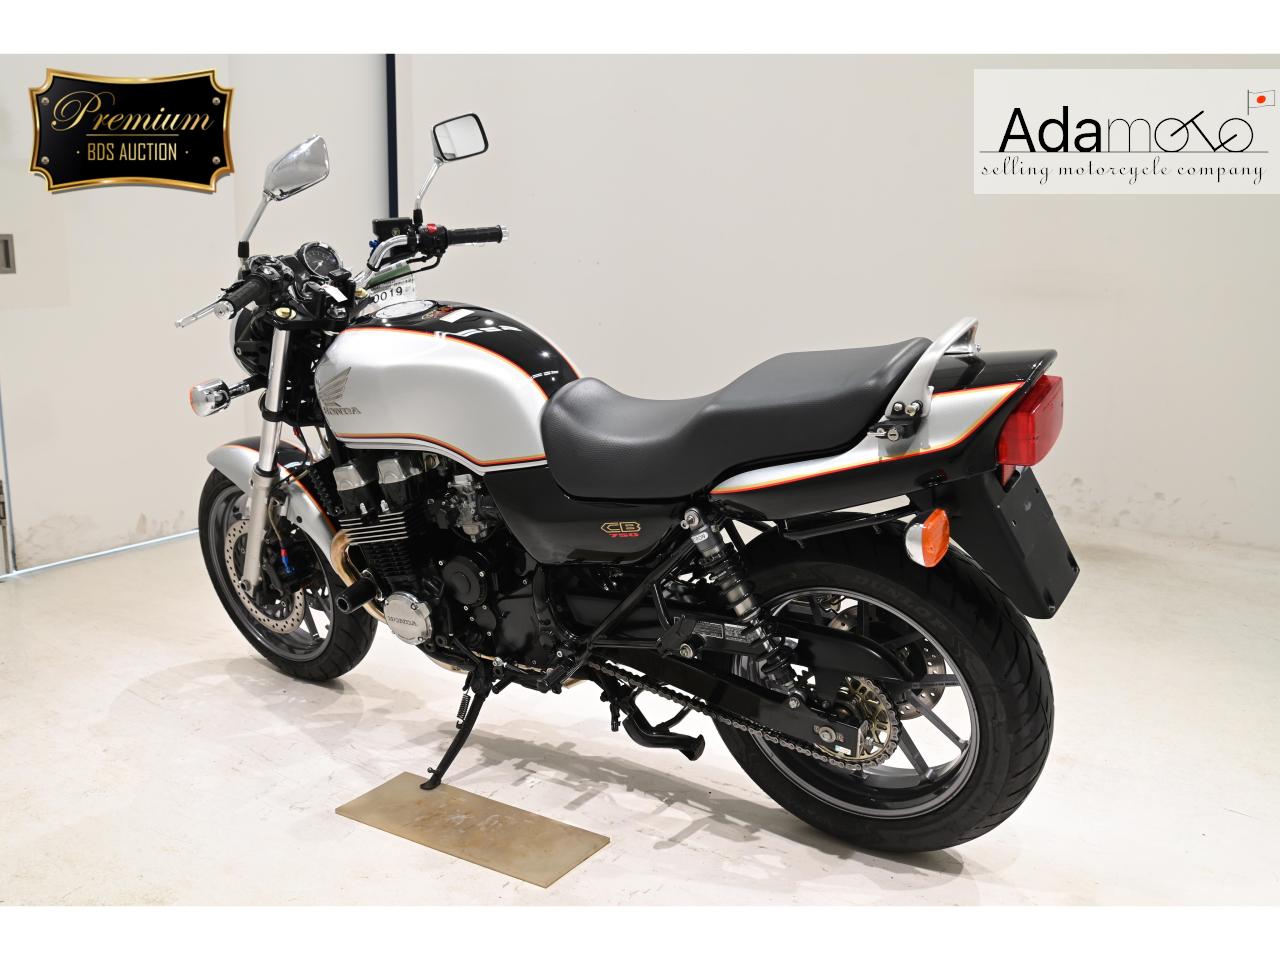 Honda CB750 2 - Adamoto - Motorcycles from Japan